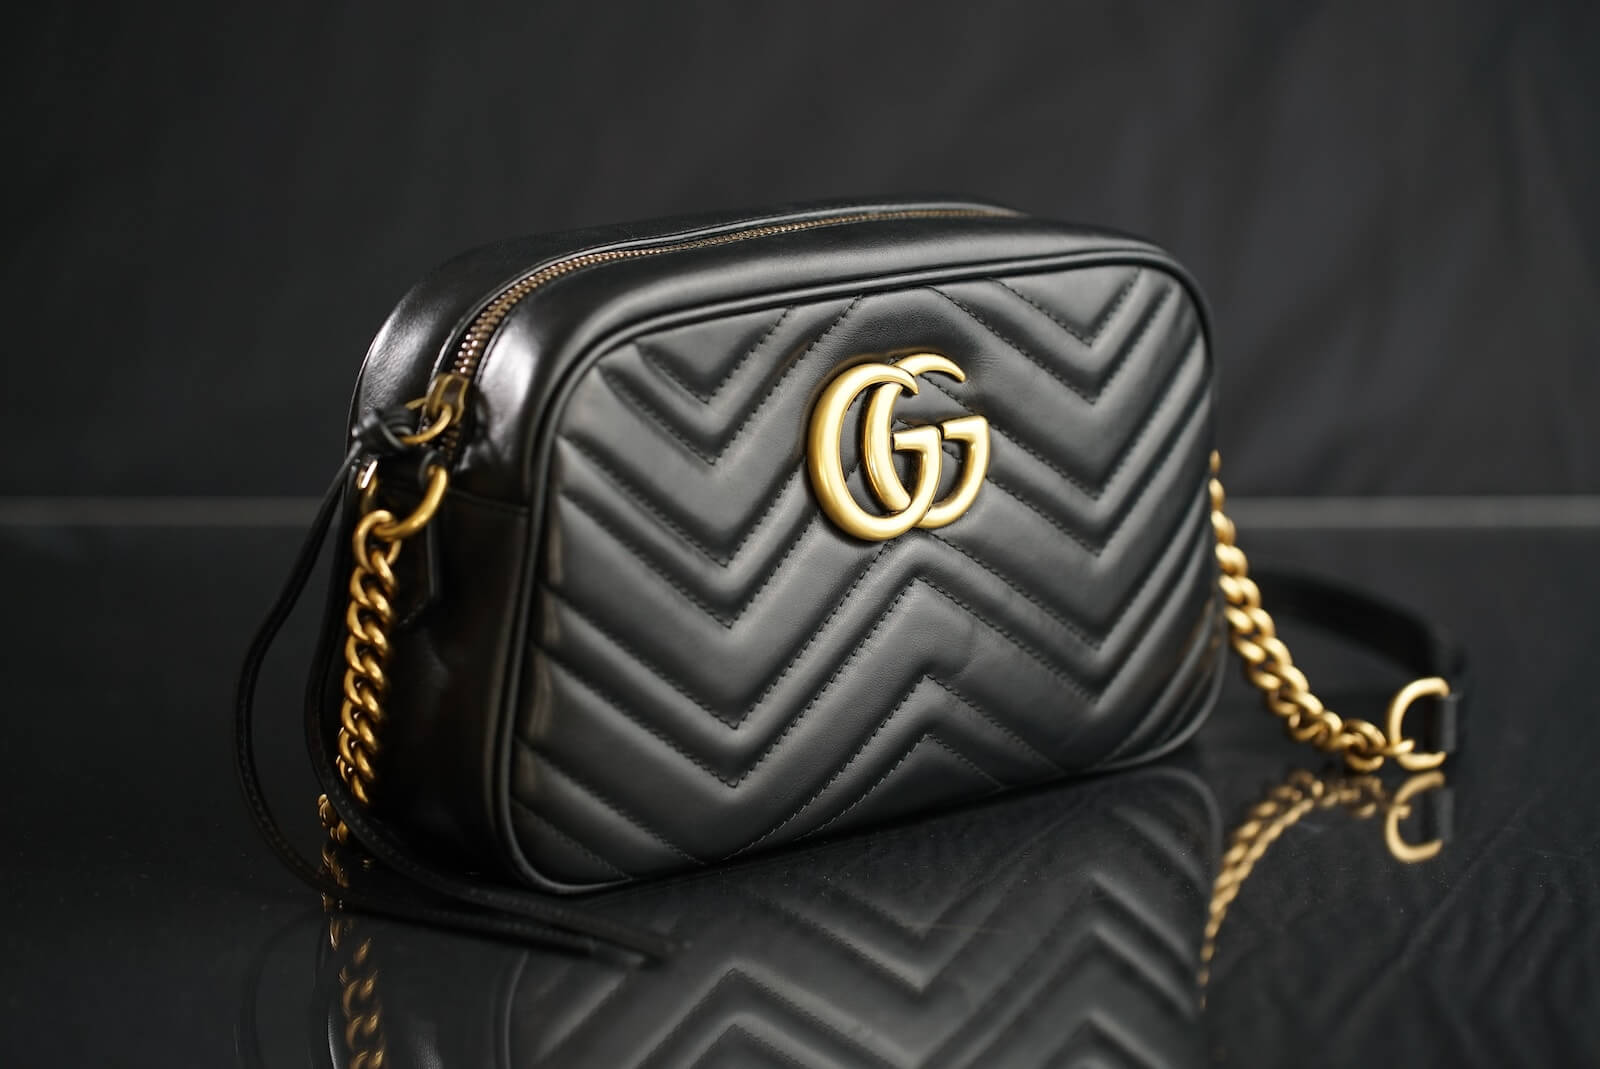 The Best Designer Handbags from Top Luxury Purse Brands, According